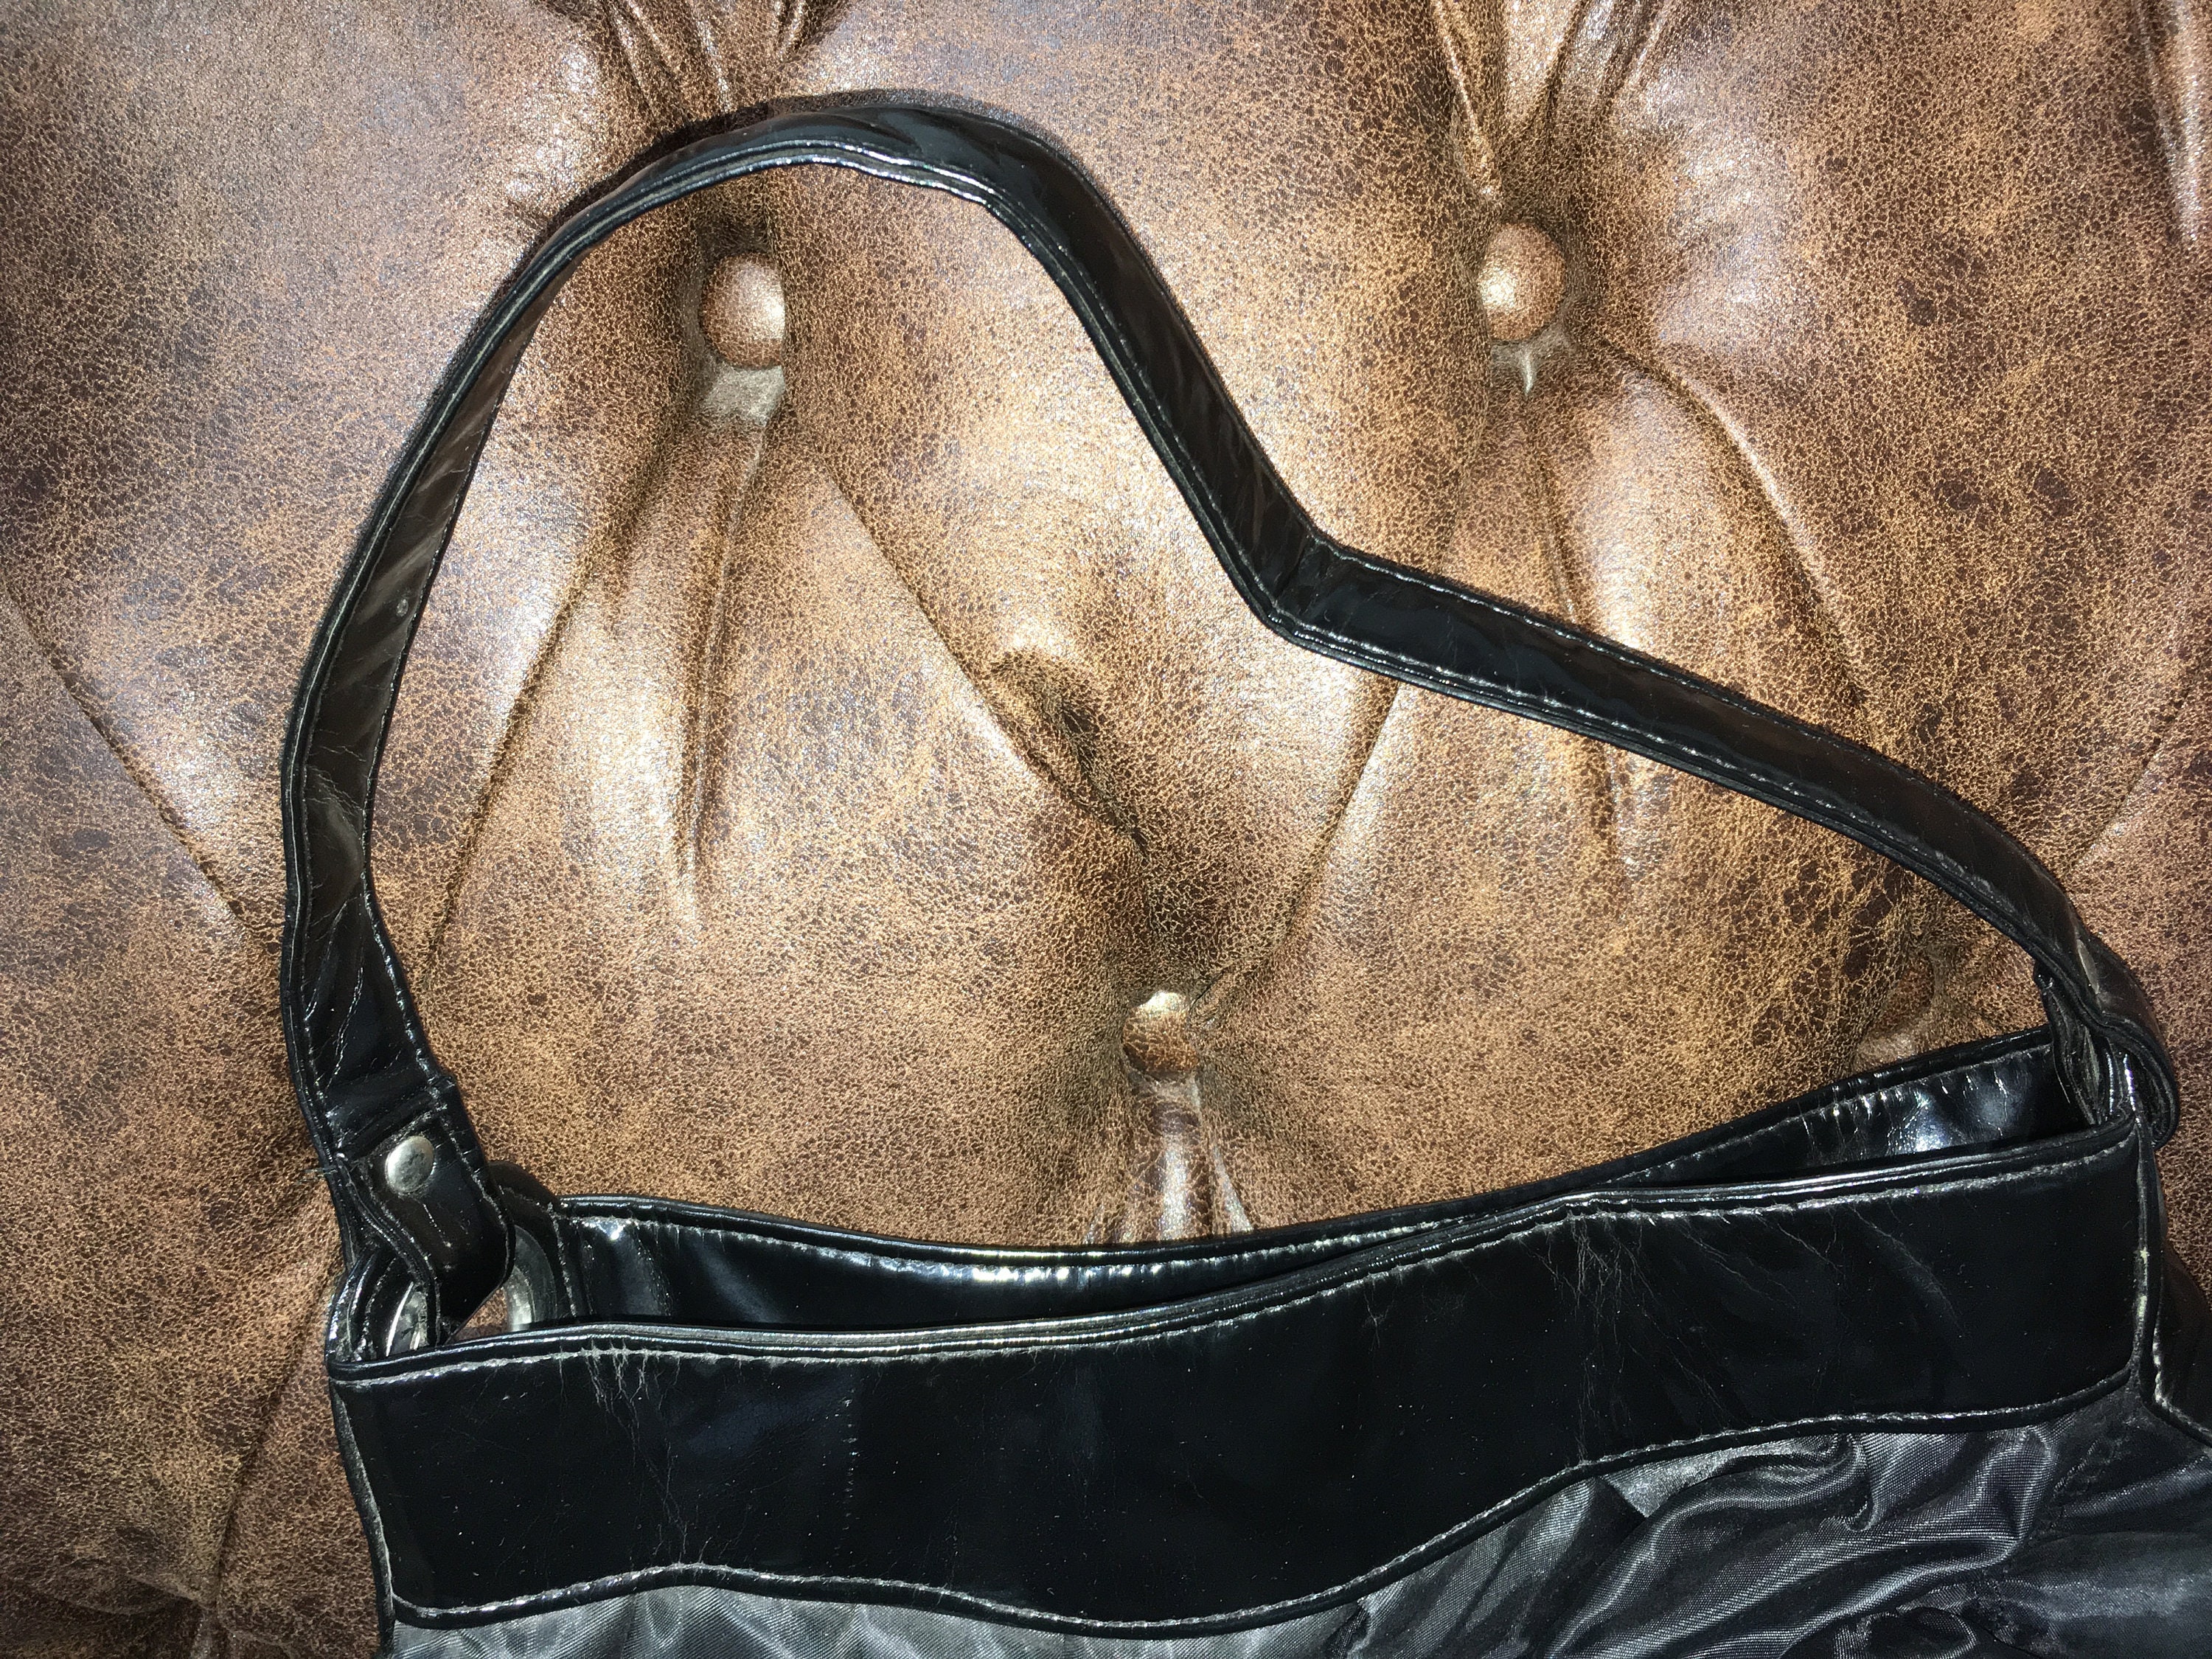 Big Black Bag Chain Handbag Shoulder Crossbody | Women Shoulder Bag Large  Black - Shoulder Bags - Aliexpress